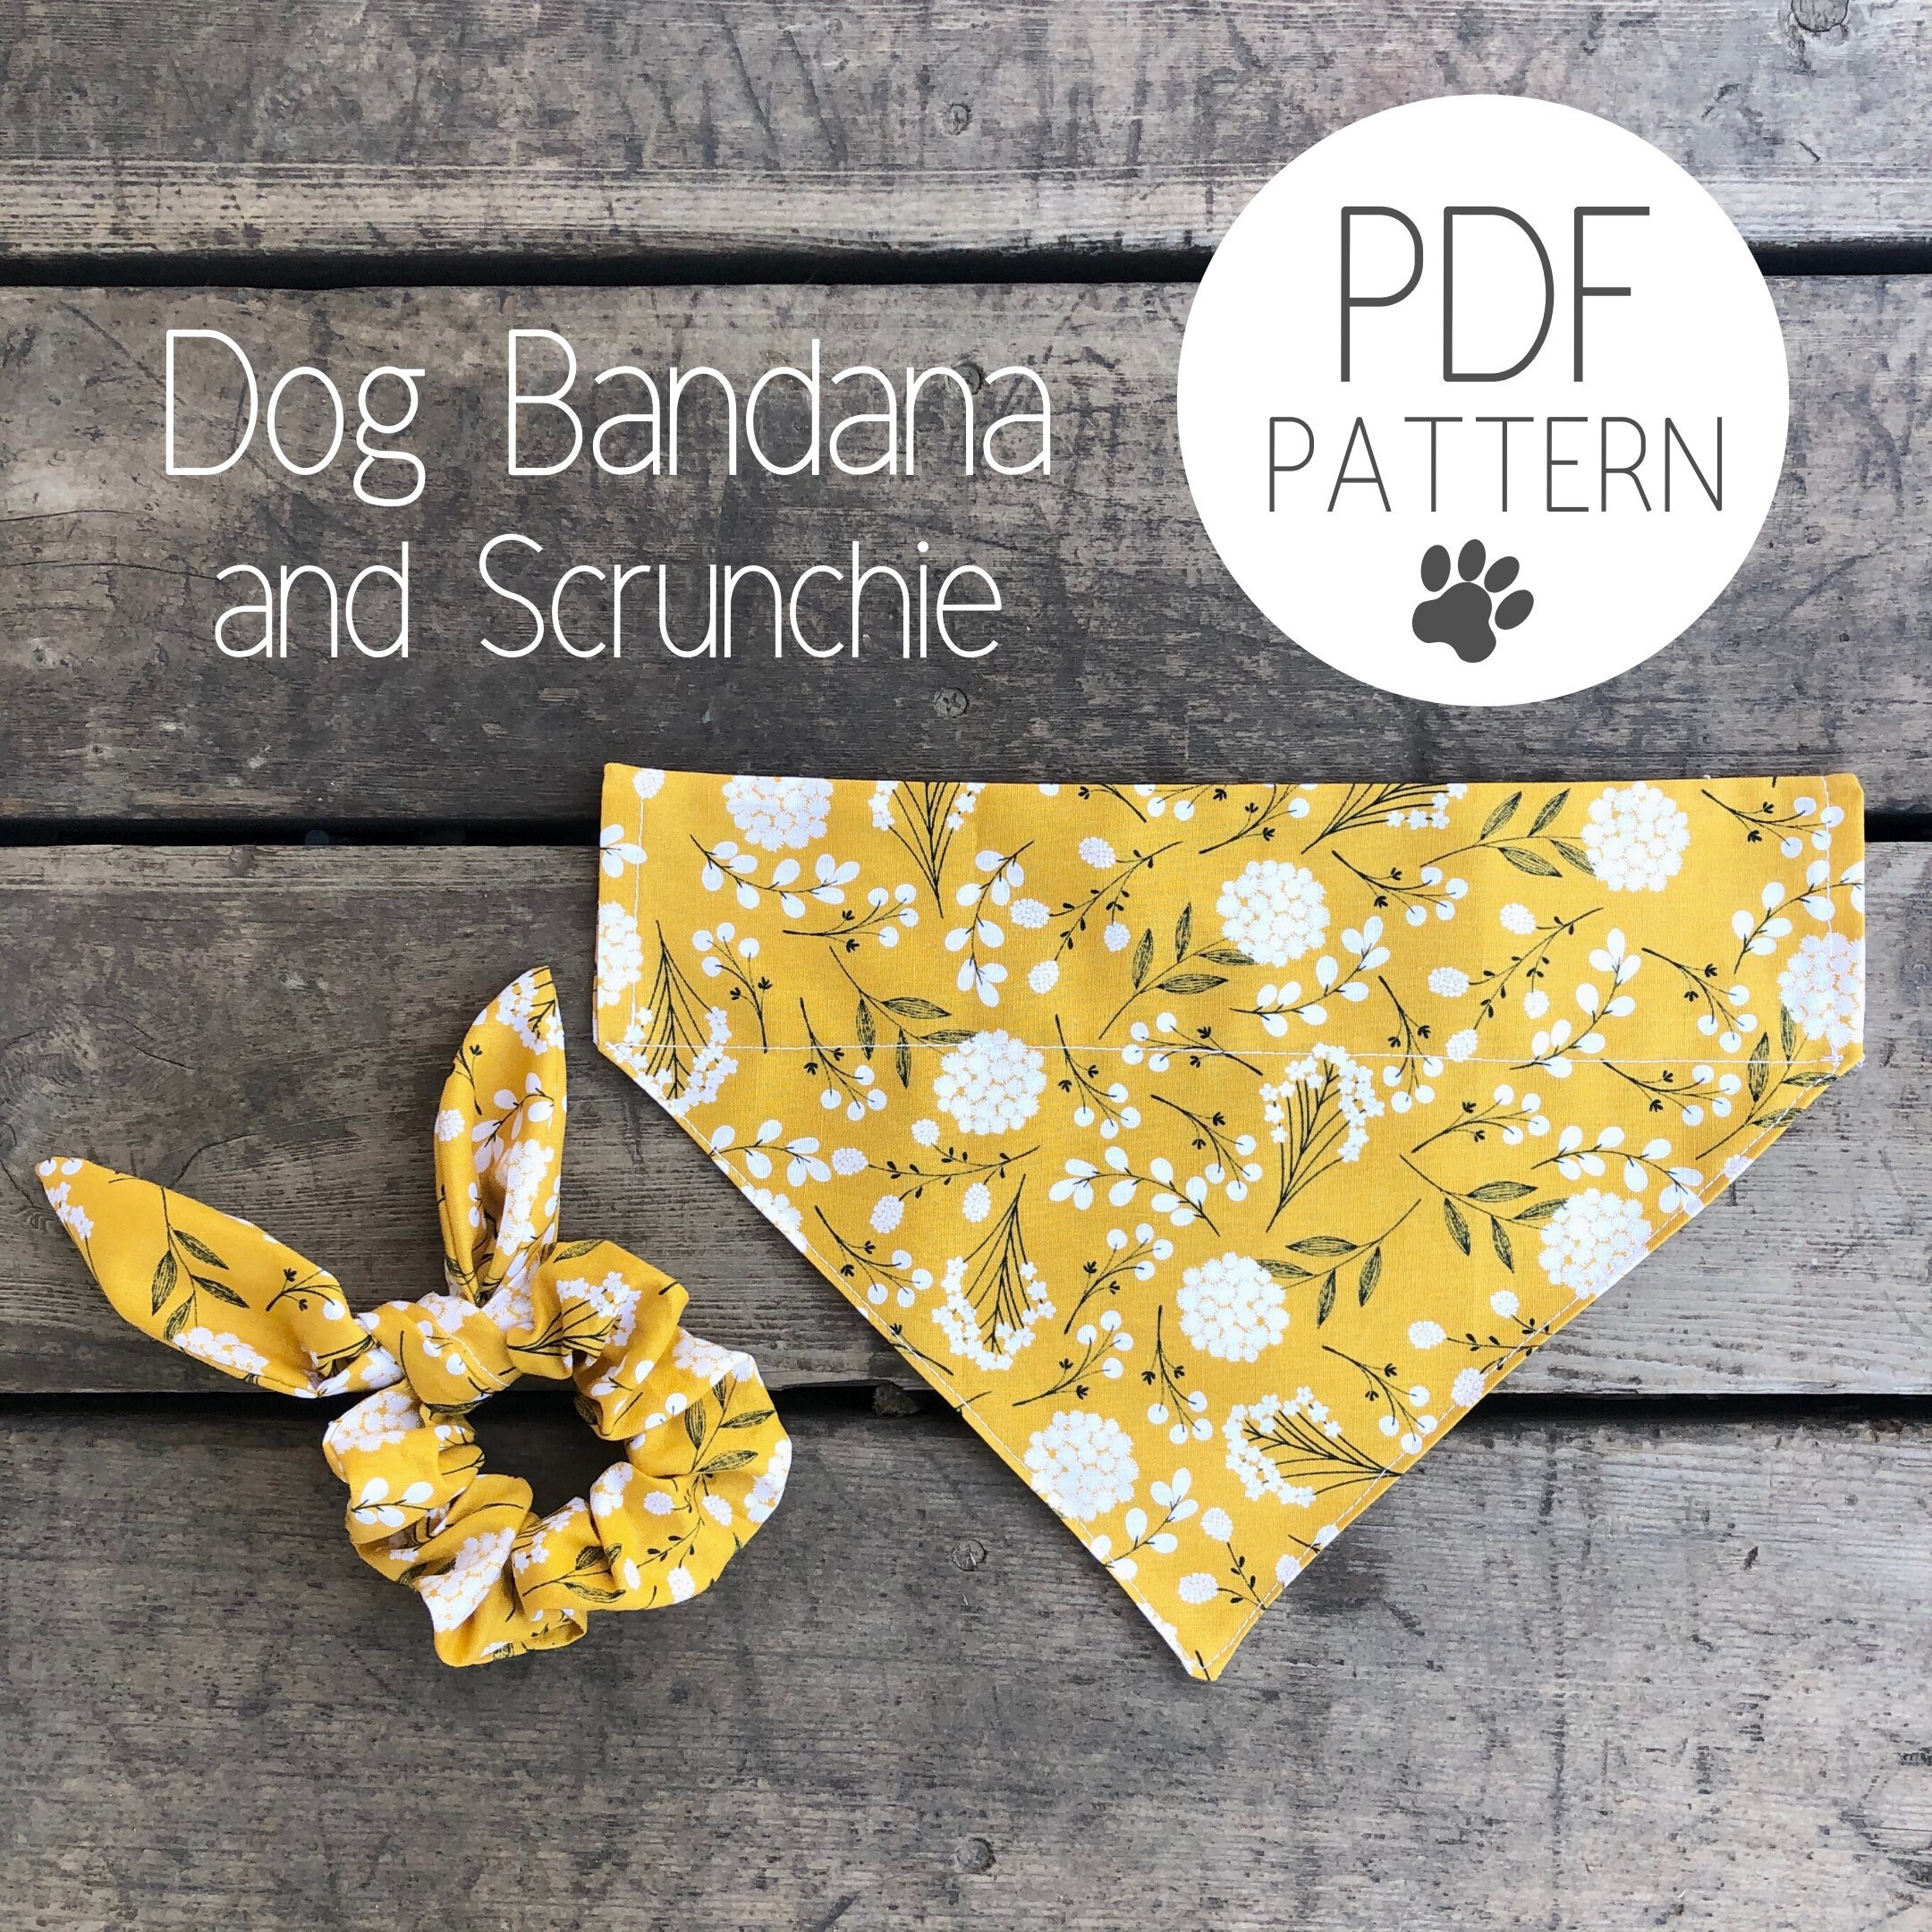 see-how-to-sew-an-easy-pet-bandana-dog-bandana-pattern-dog-bandana